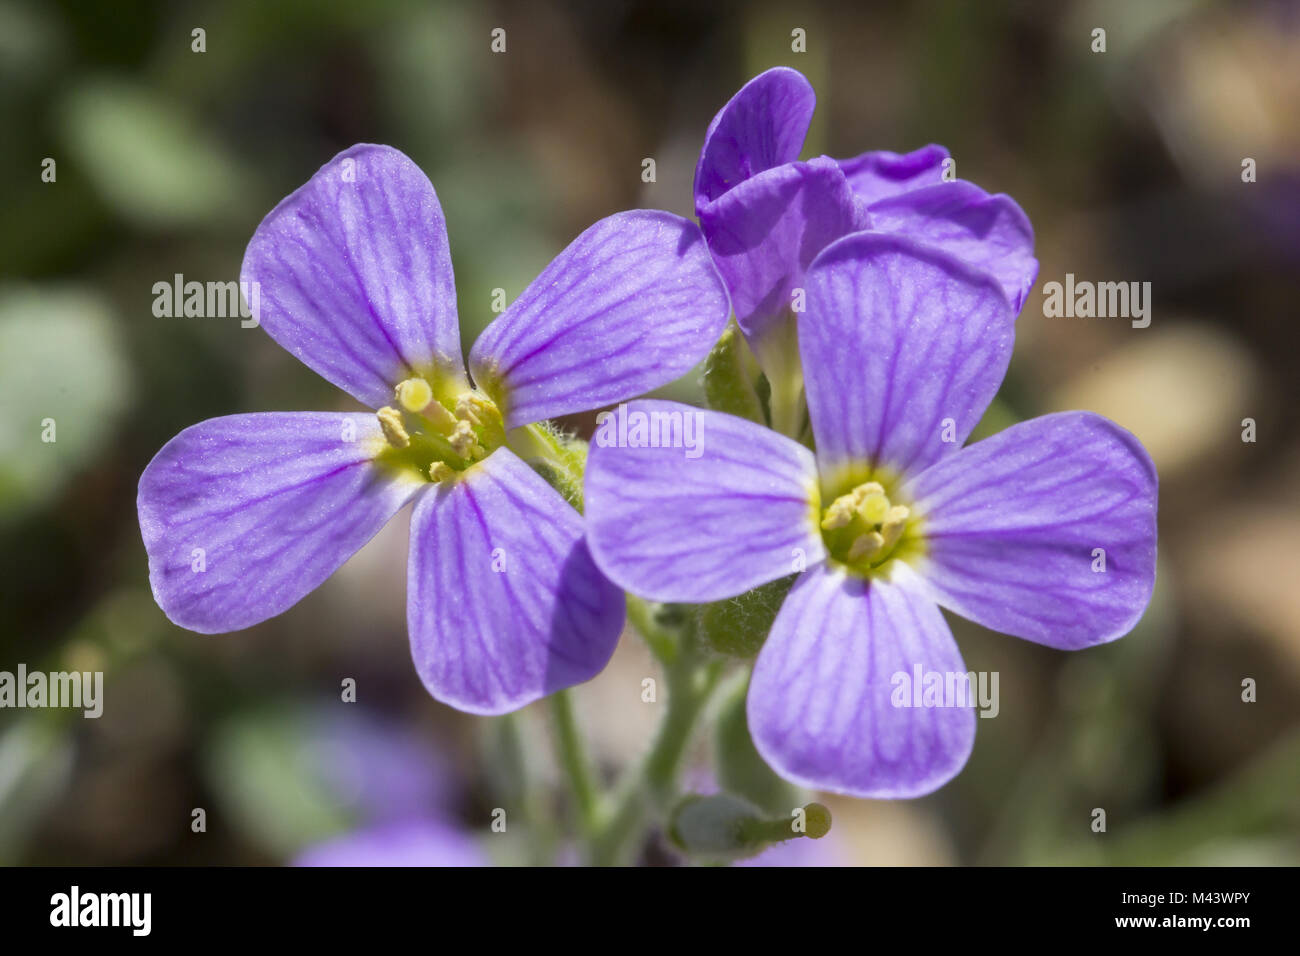 ubrieta canescens, Lilacbush, Purple rock cress Stock Photo